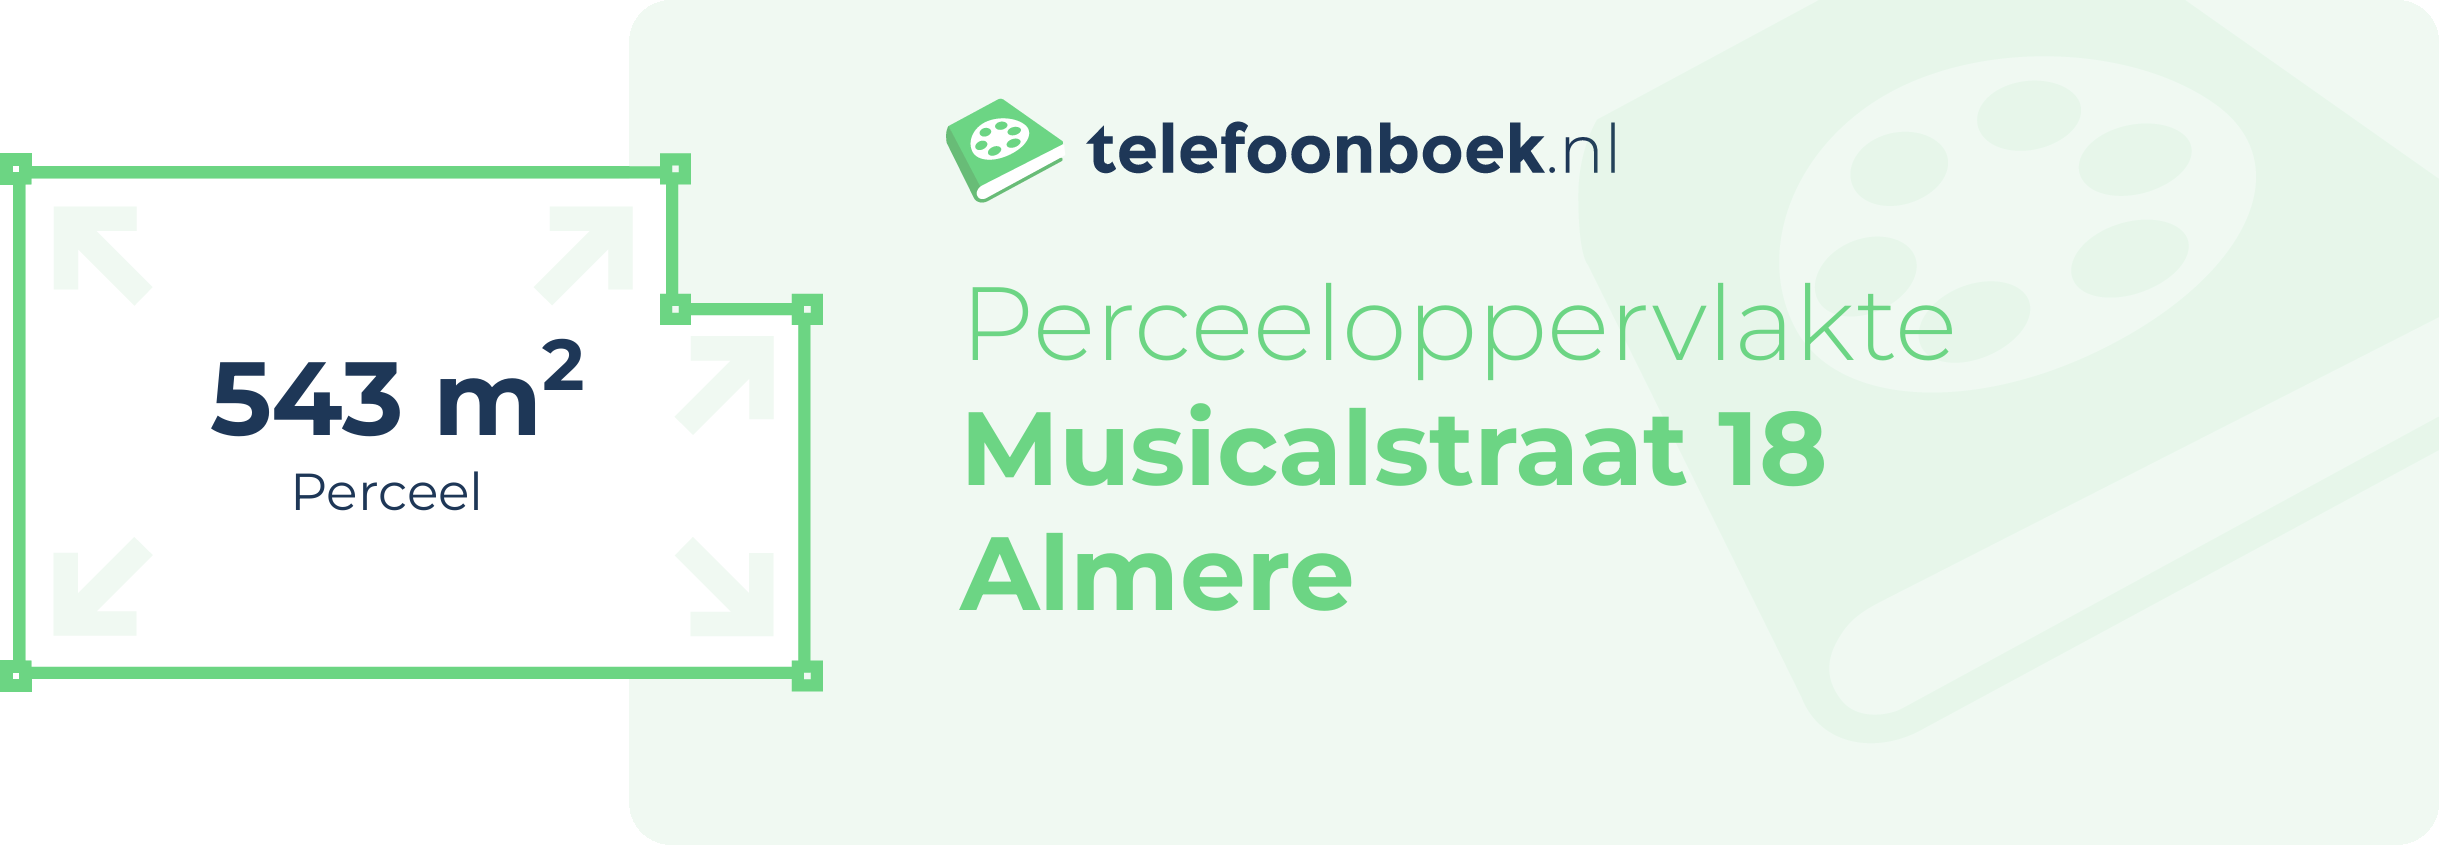 Perceeloppervlakte Musicalstraat 18 Almere